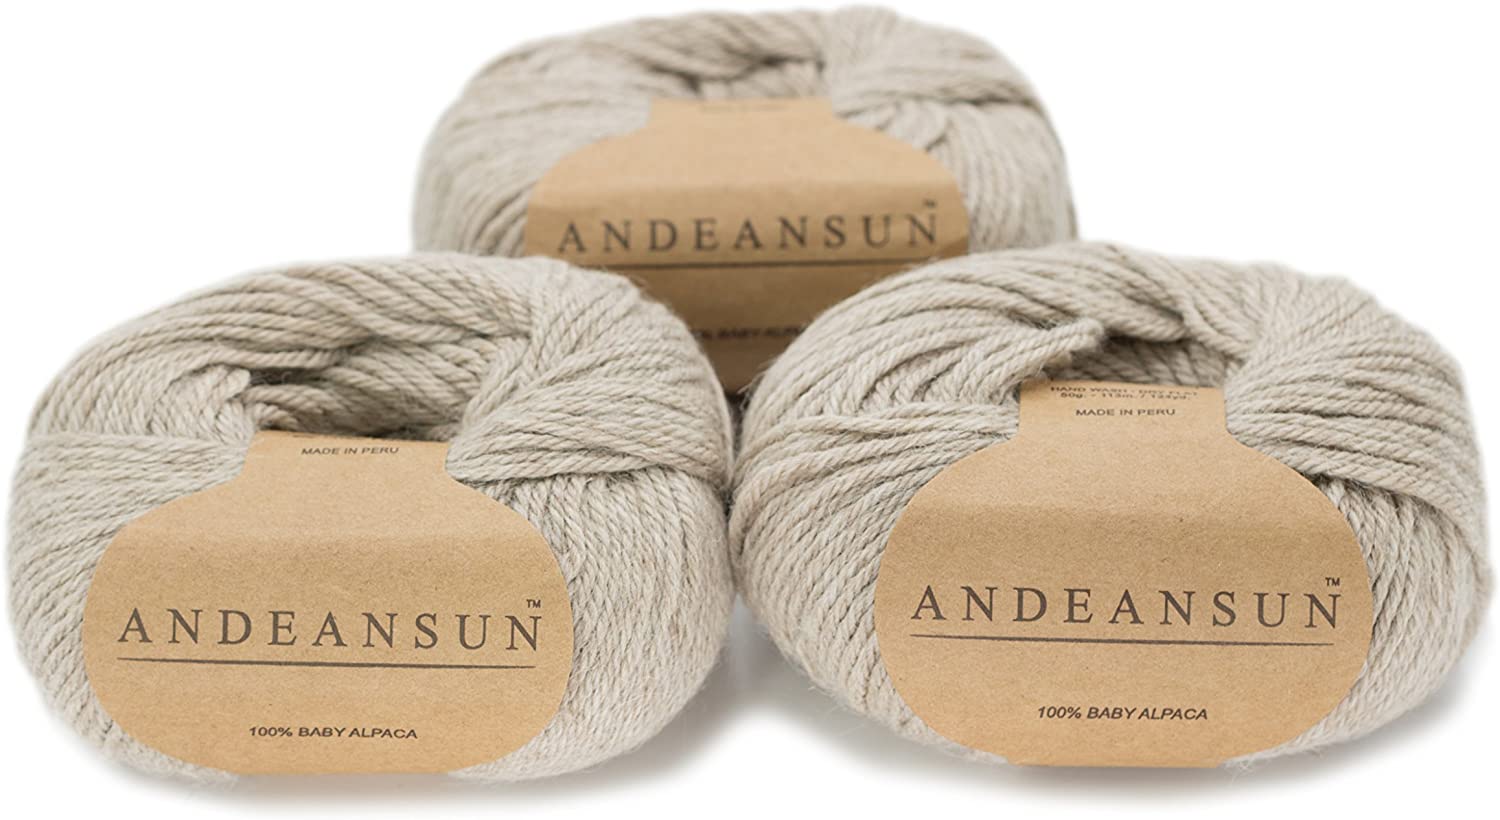 AndeanSun 100% Baby Alpaca Yarn